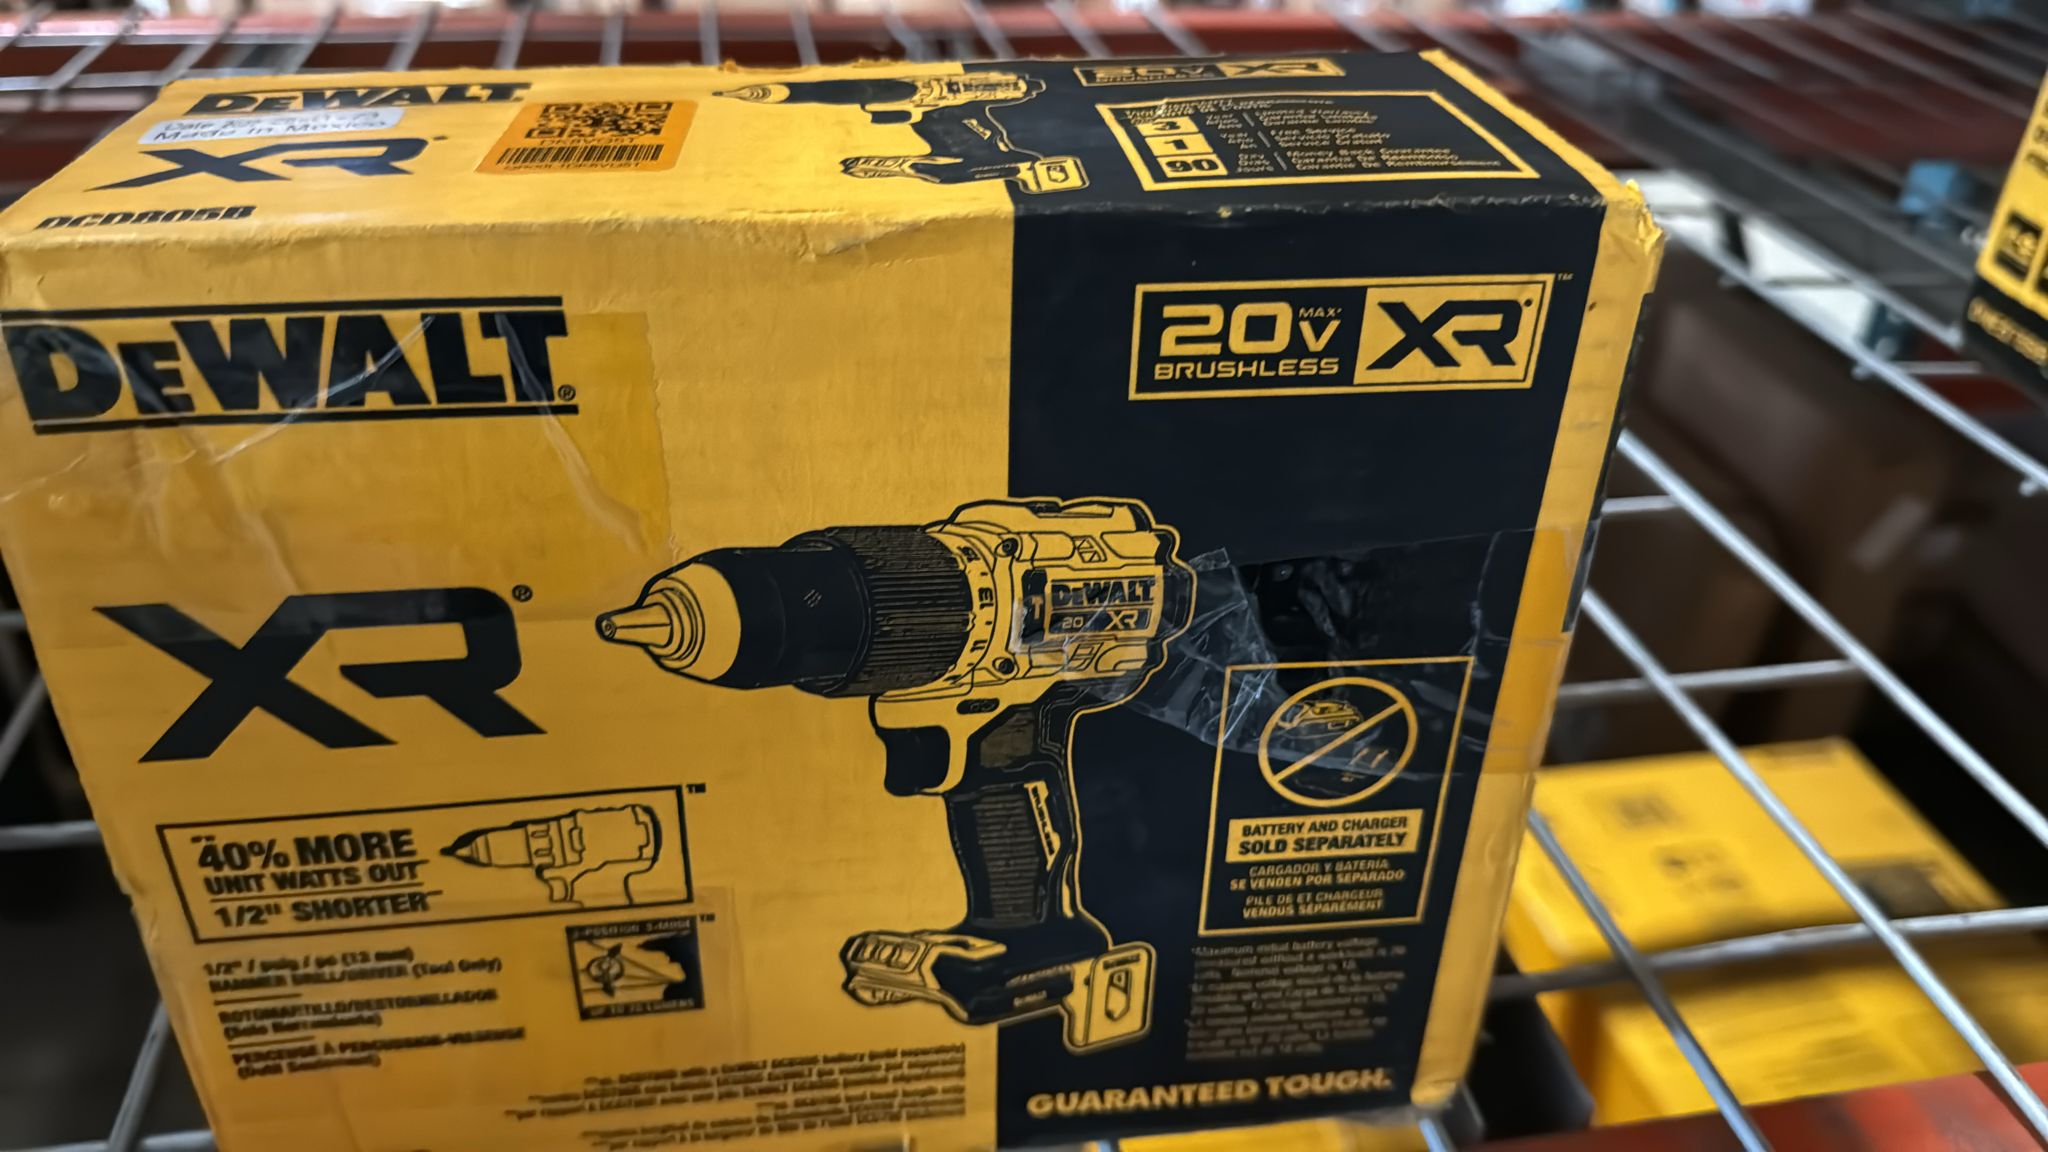 DEWALT XR 1/2-in 20-volt Max Speed Brushless Cordless Hammer Drill (Bare Tool) - $125